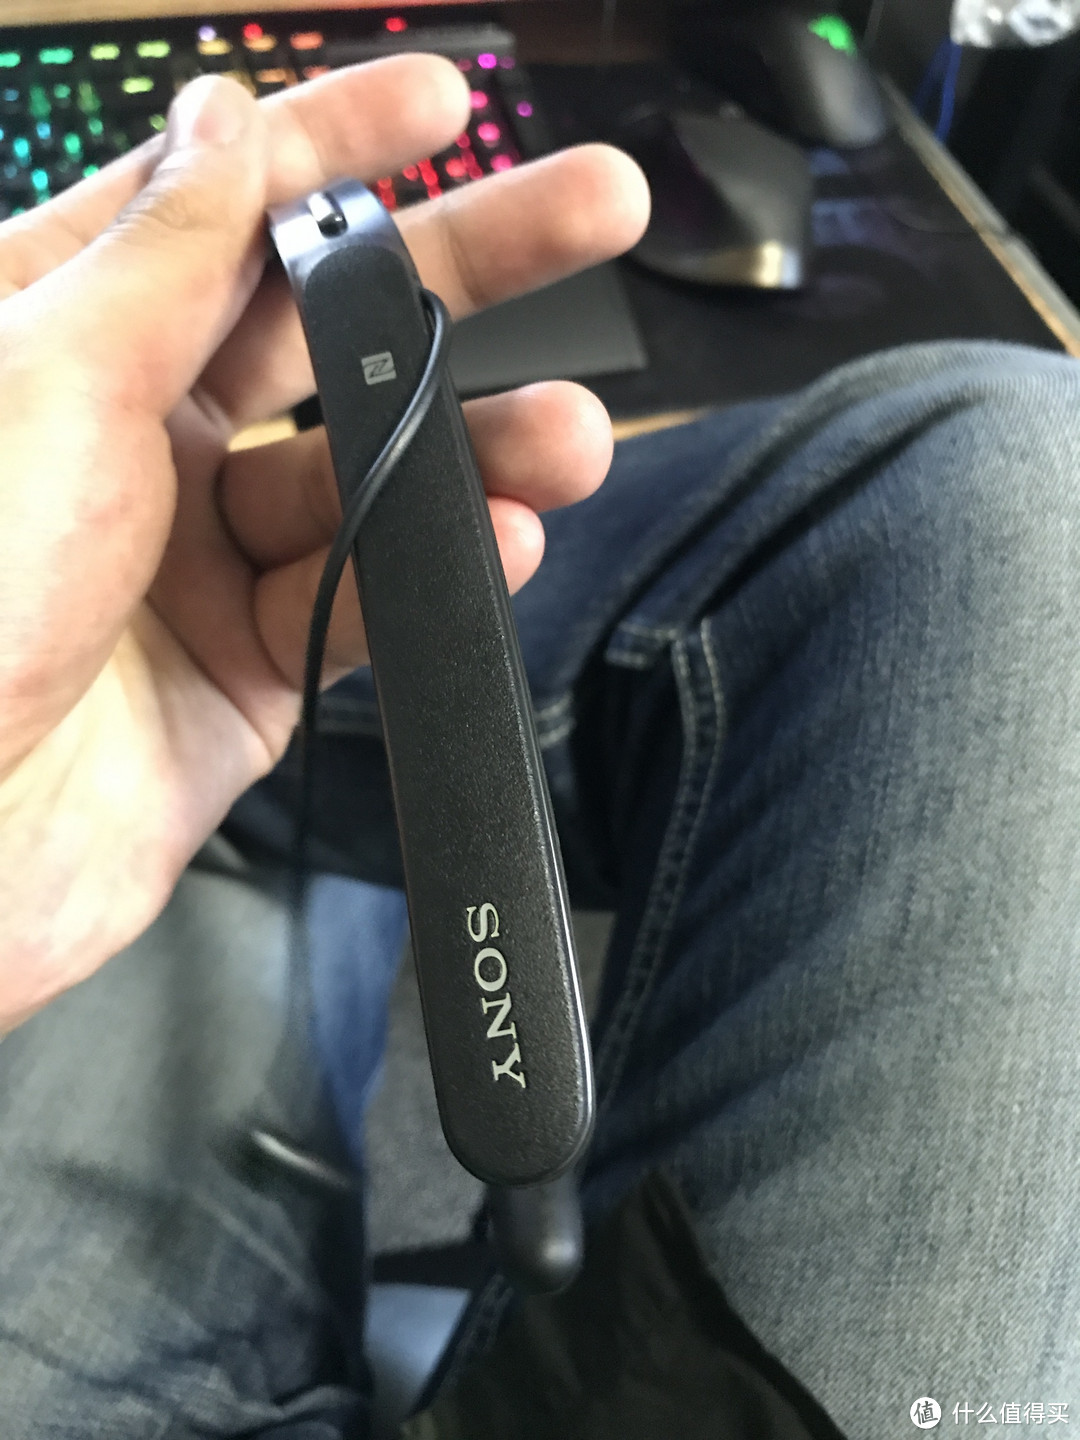 Sony 索尼 WI-1000X 耳机 简评